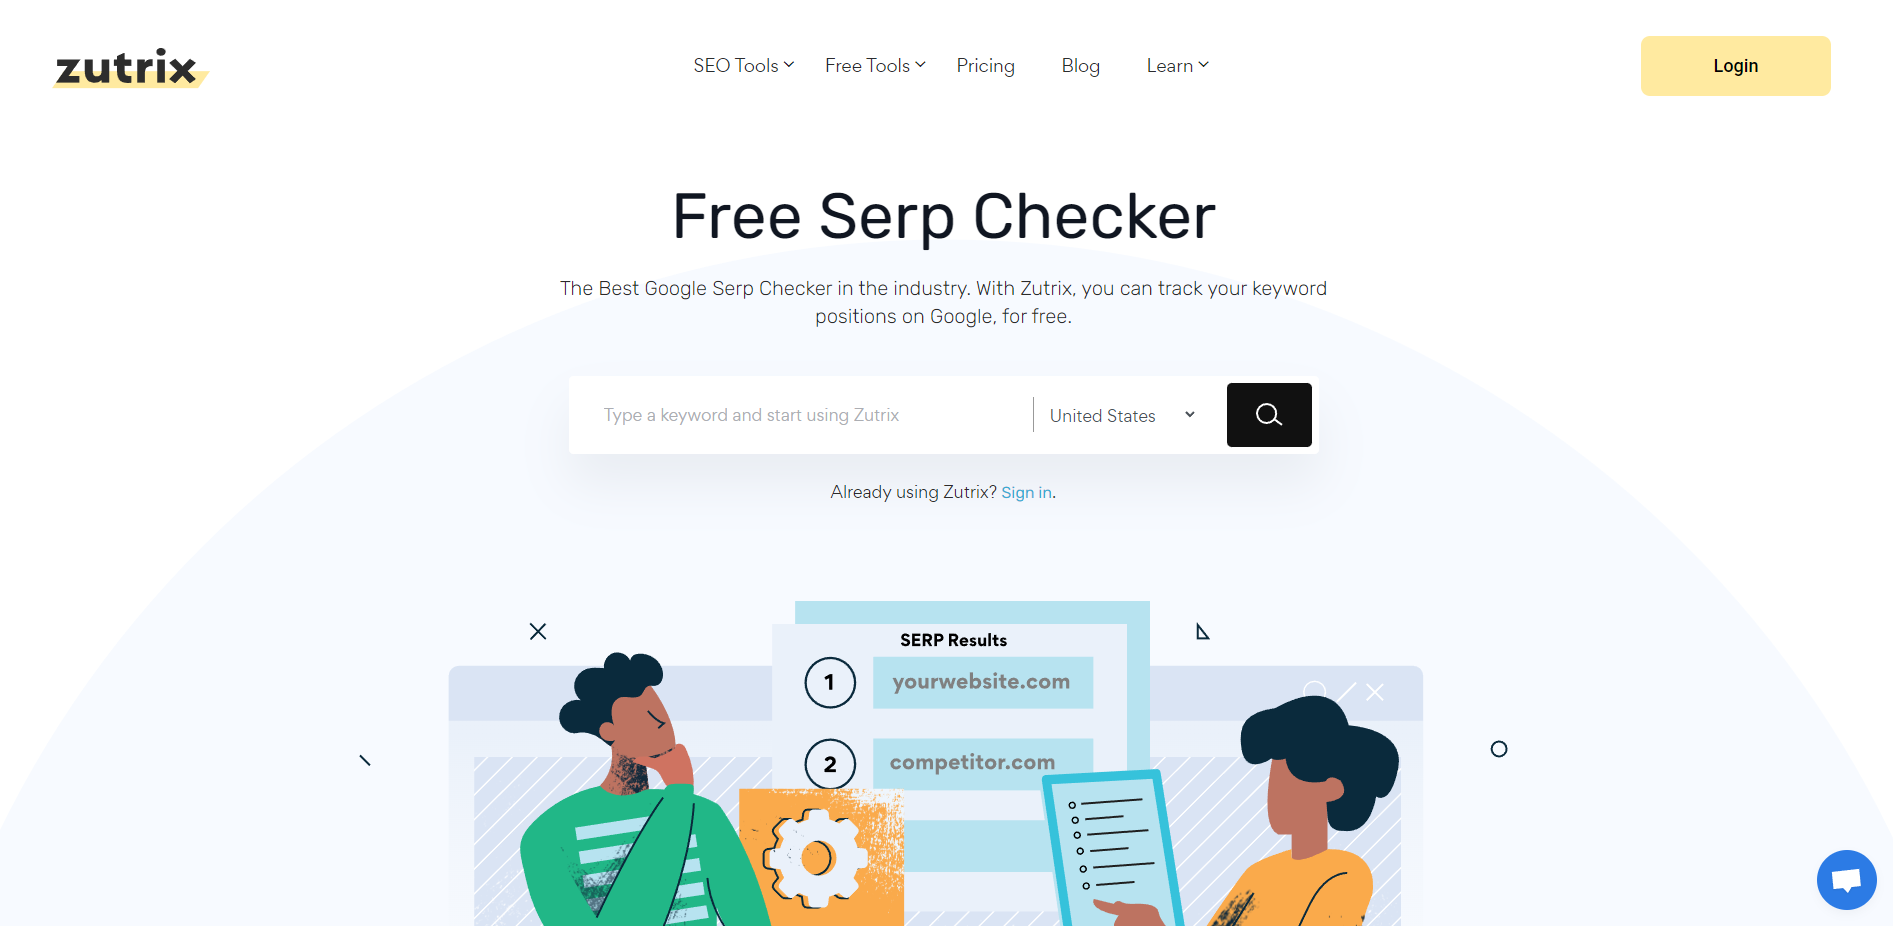 Free serp checker